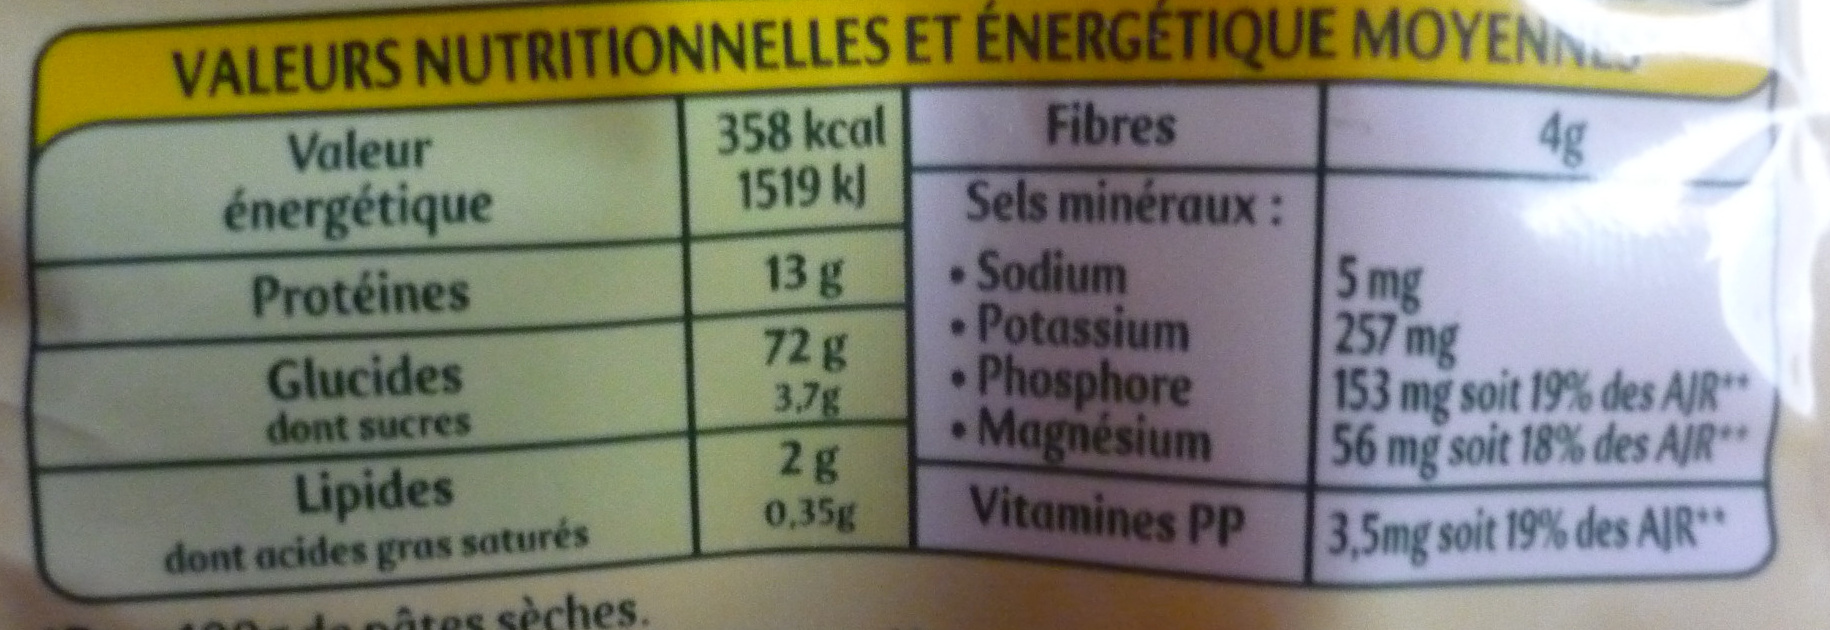 Panzani gansettes 500g - Nutrition facts - fr